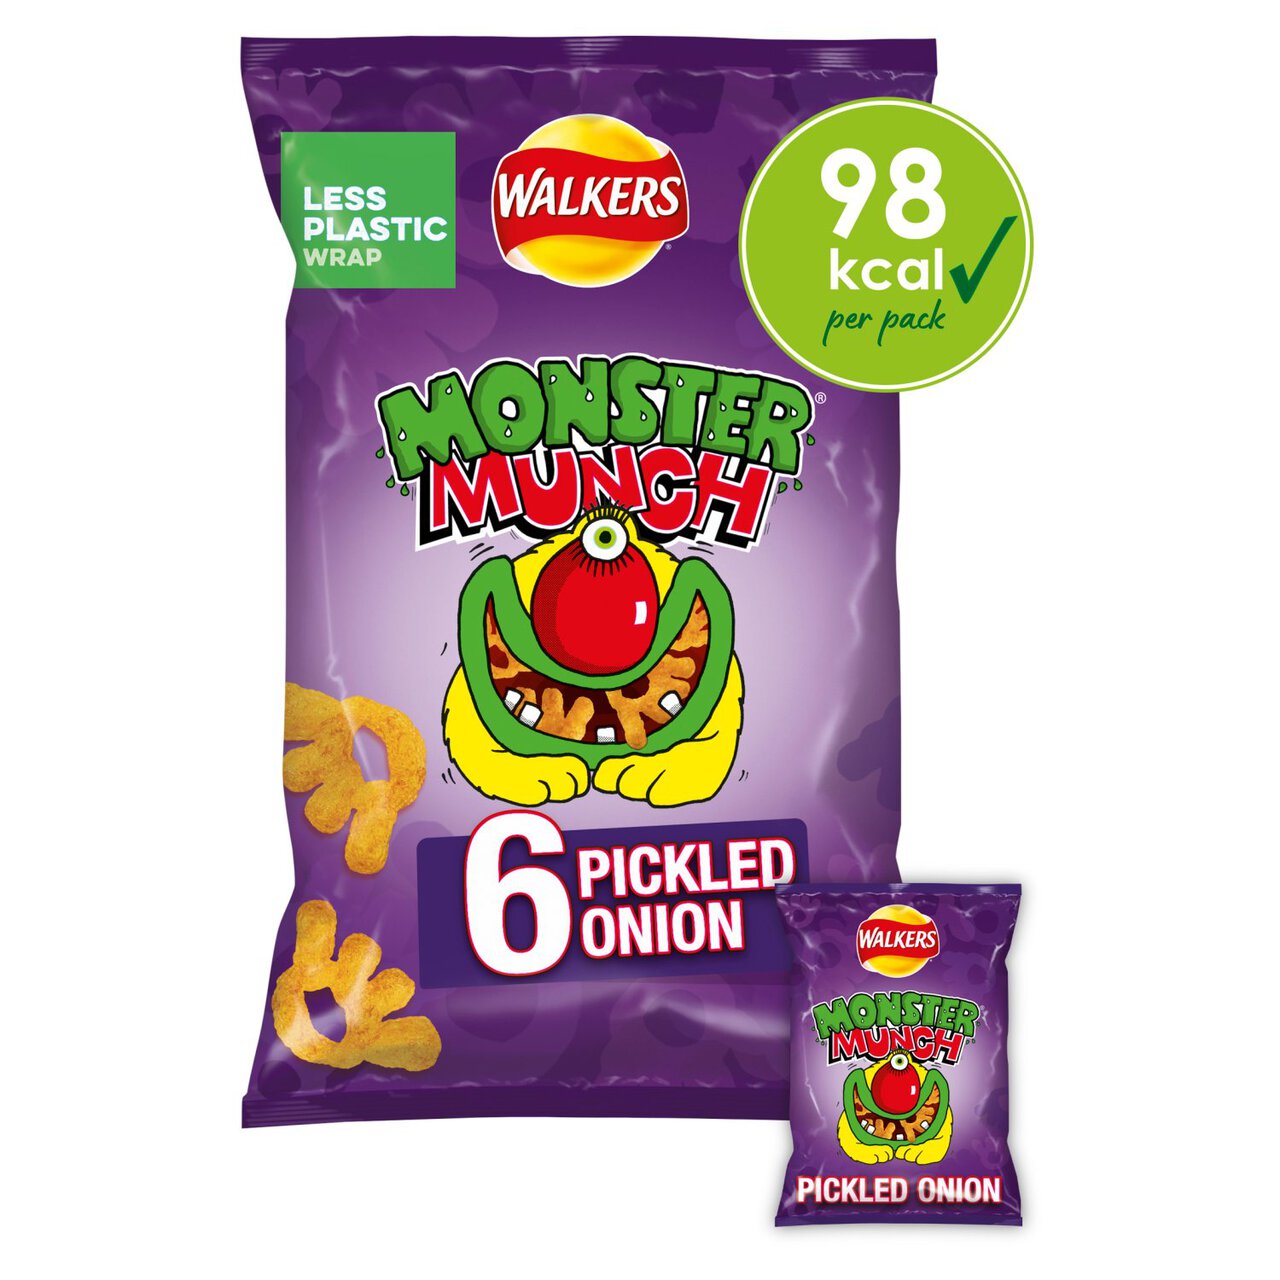 Walkers Monster Munch Pickled Onion Snacks 6 per pack